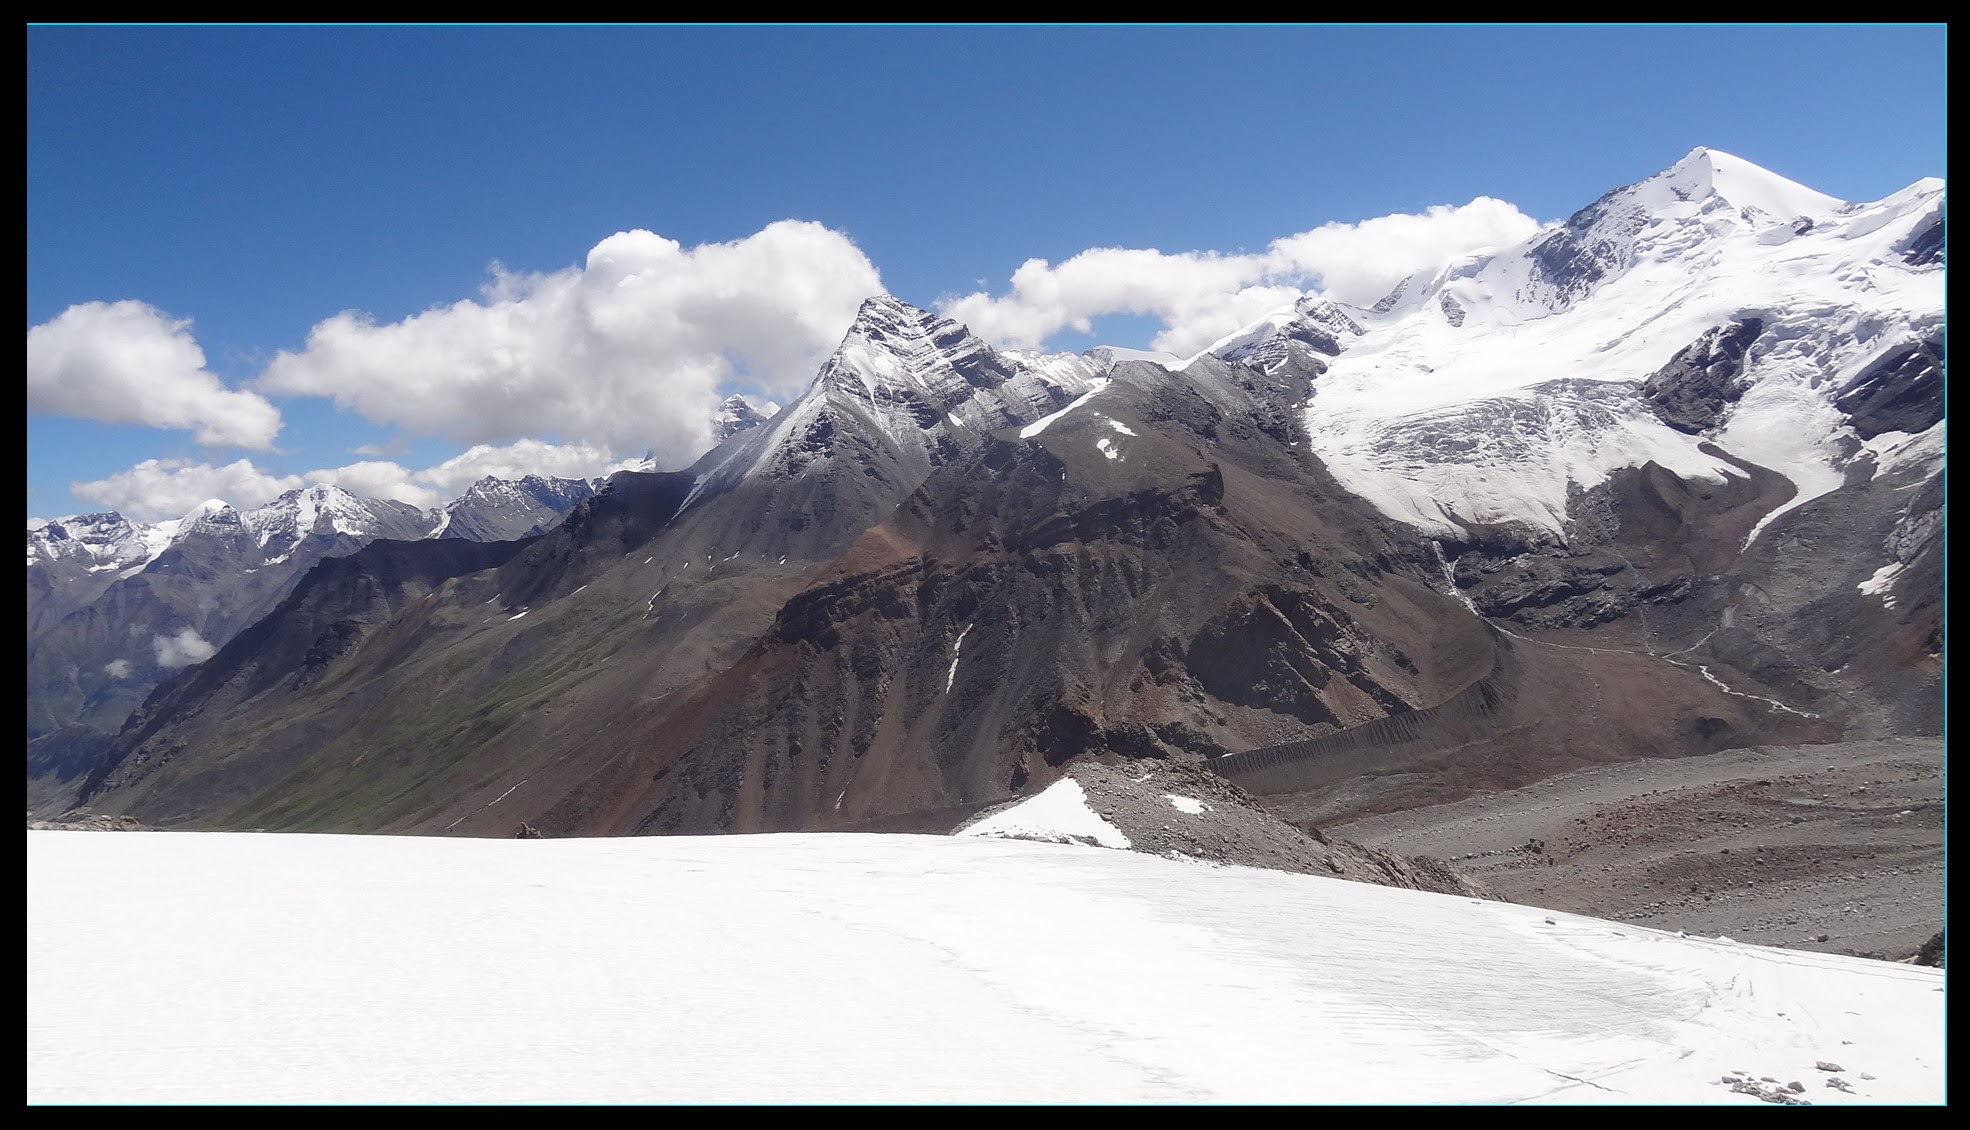 Glacier on baspa valley (Chitkul) side